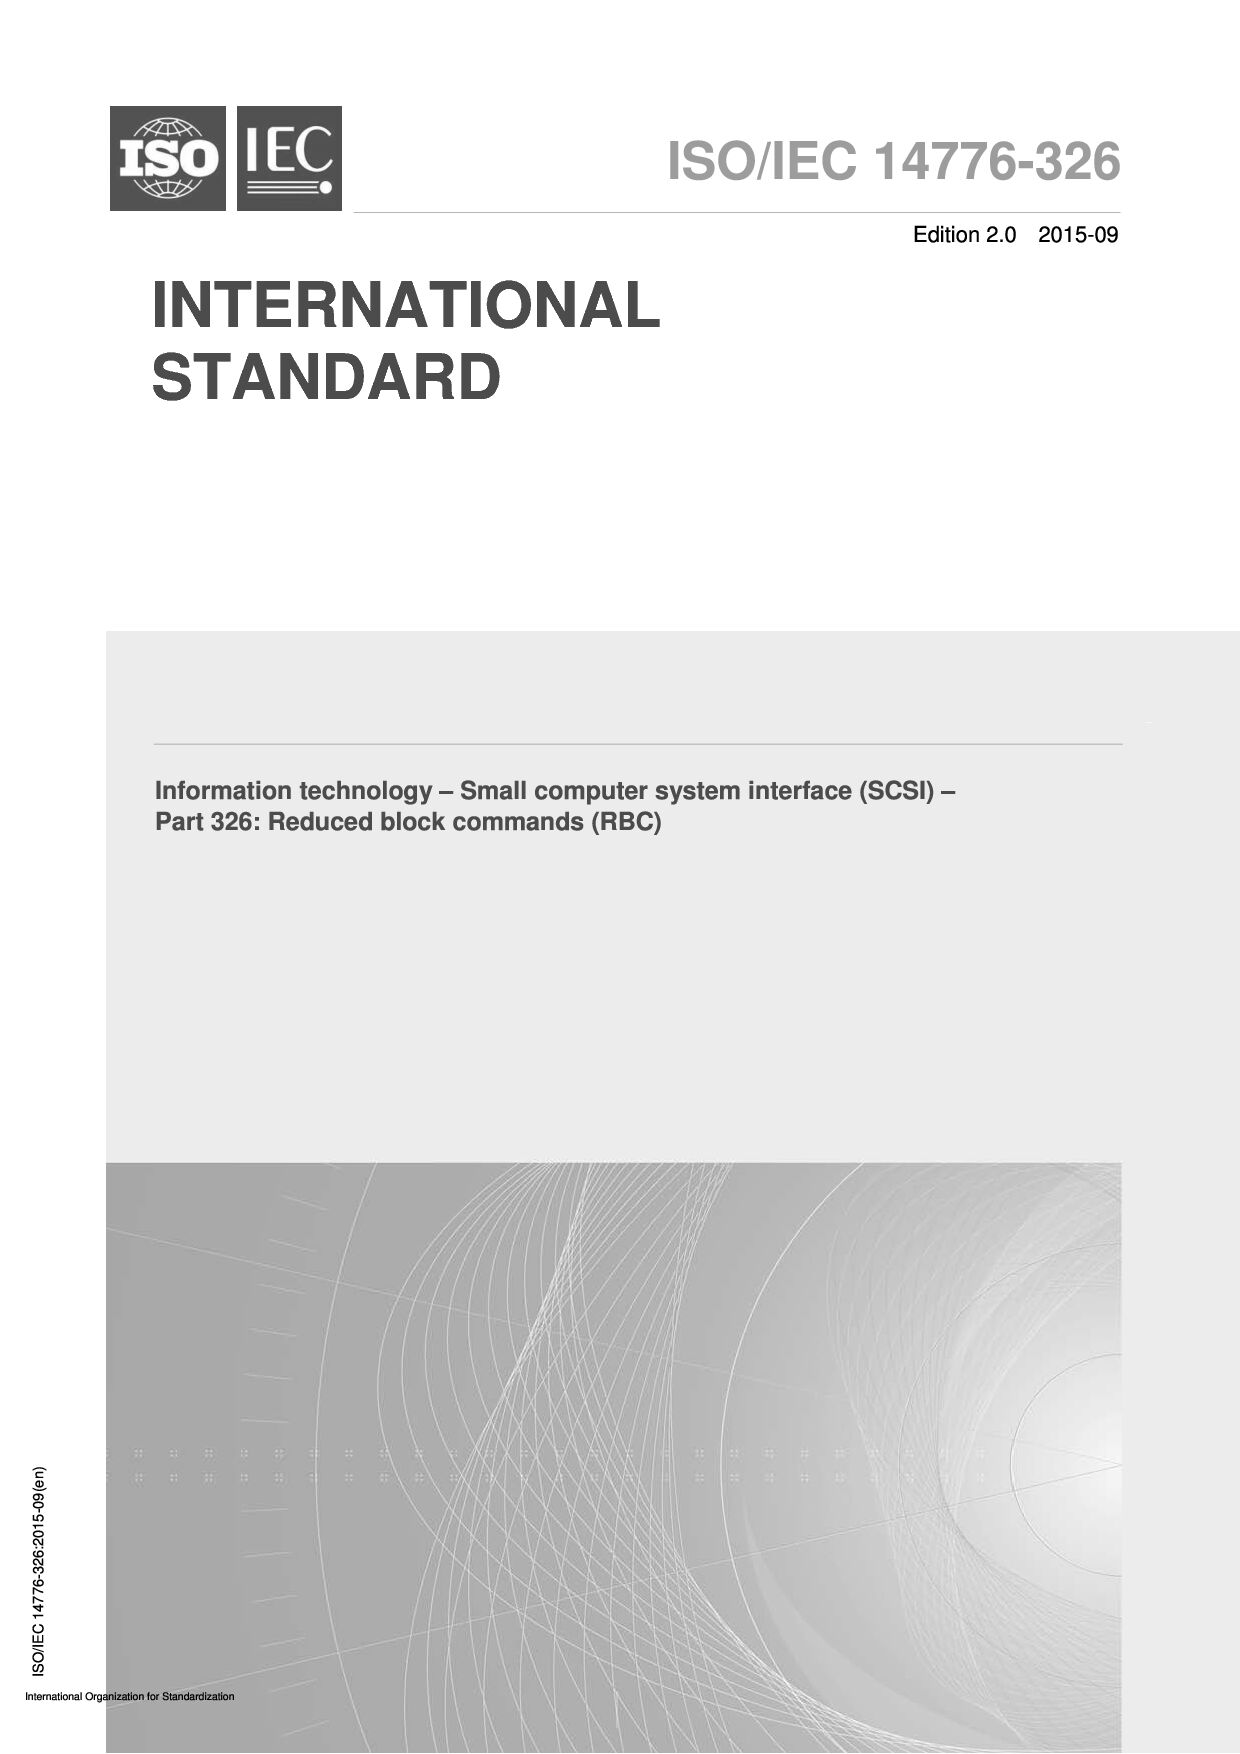 ISO/IEC 14776-326:2015